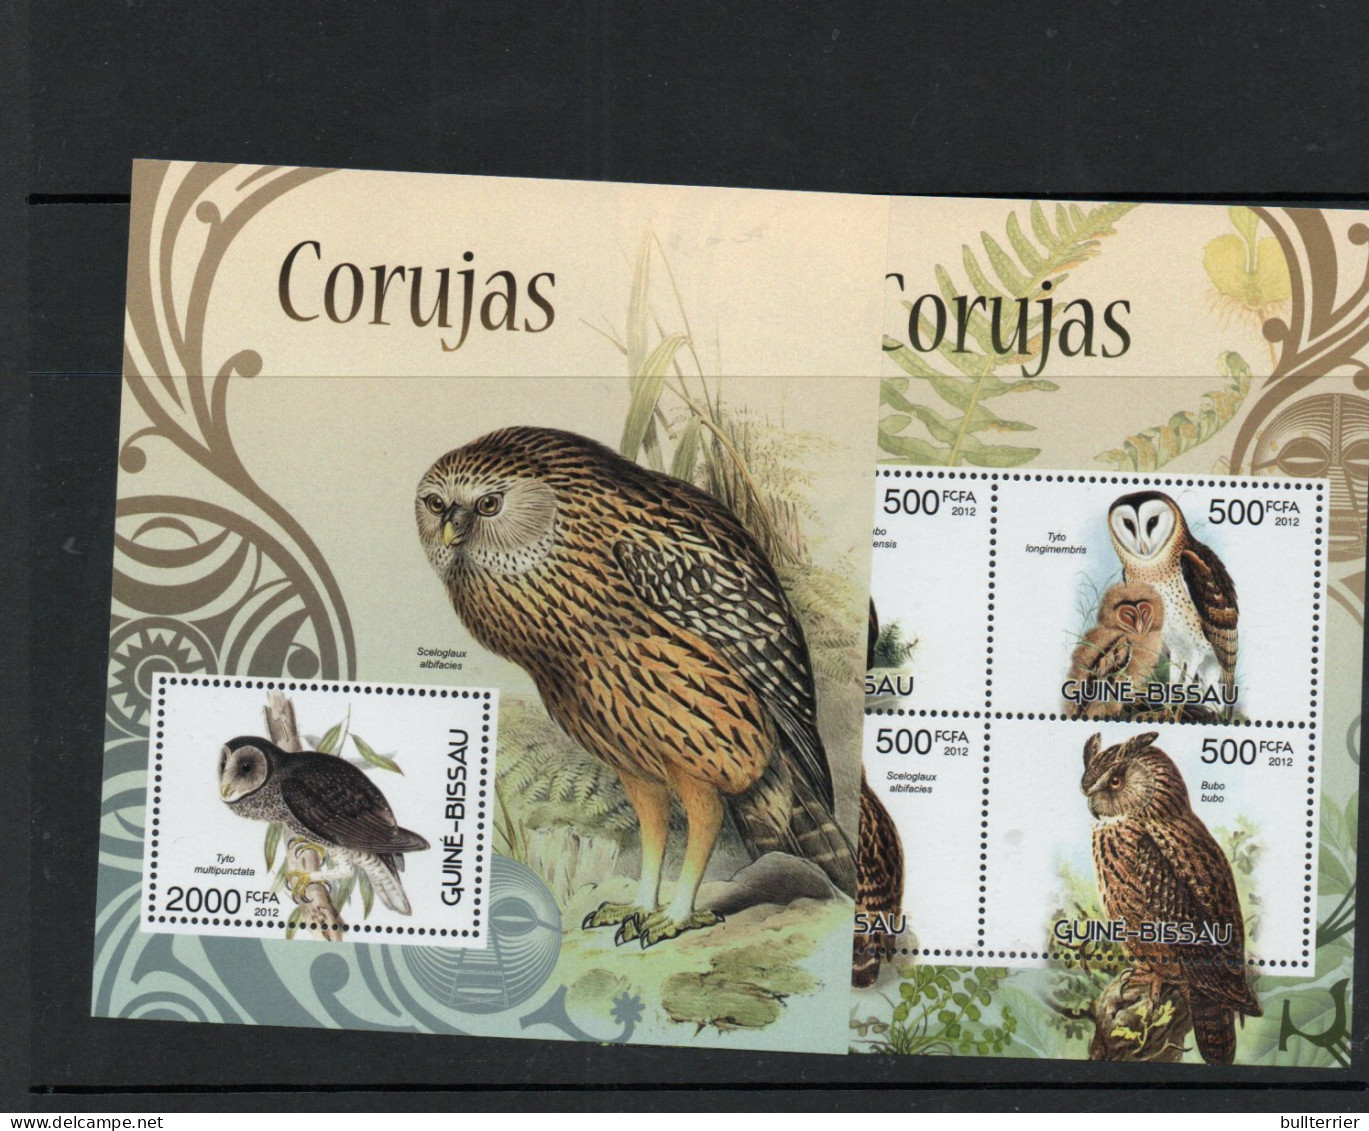 BIRDS - GUINEA BISSAU -2012 - OWLS SHEETLET OF 4 + SOUVENIR SHEET MINT NEVER HINGED  - Owls